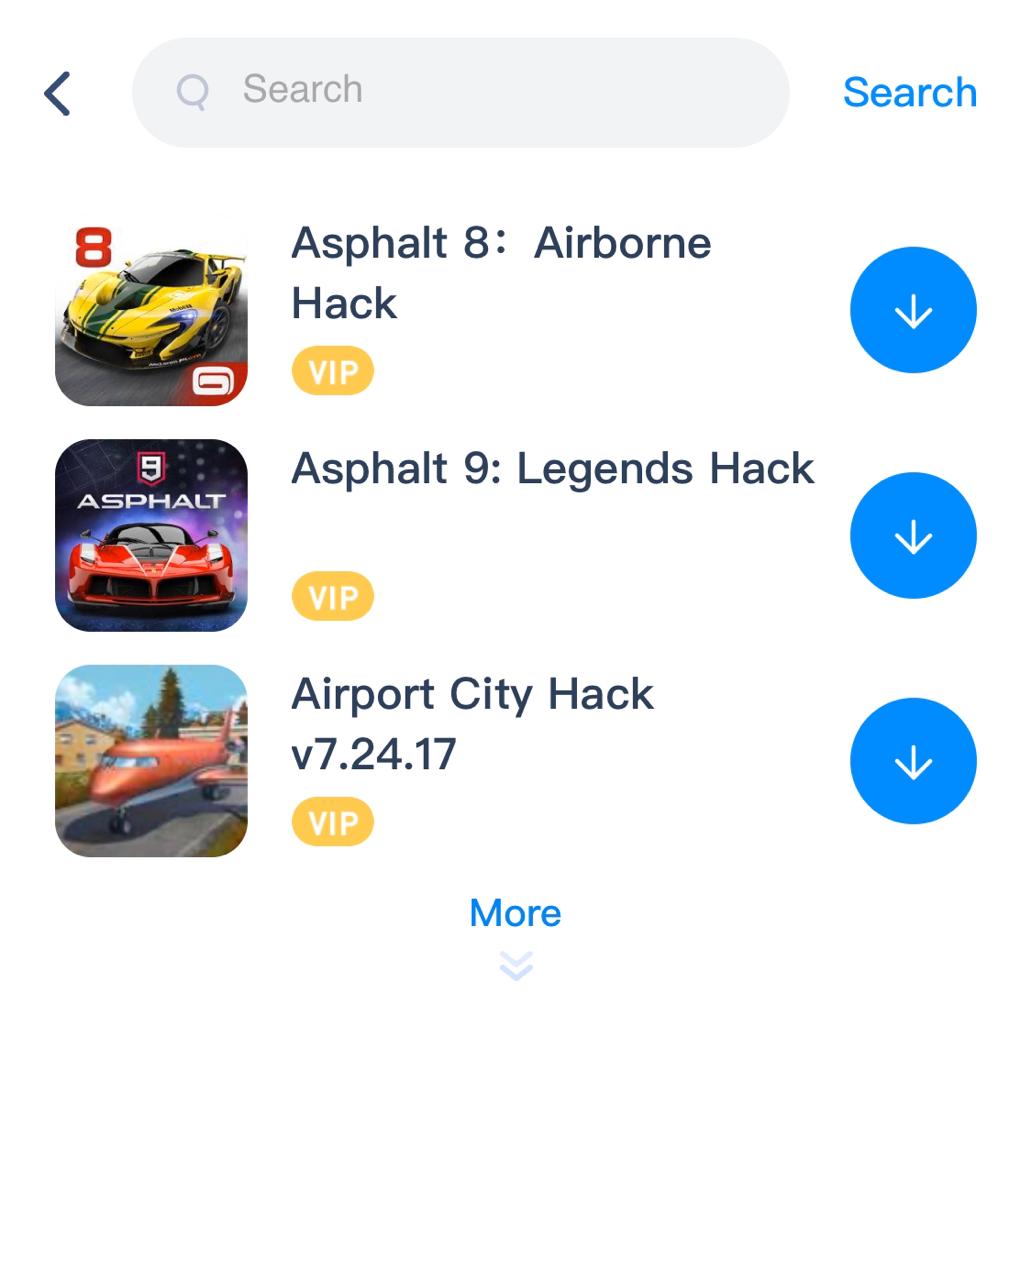 Asphalt airborne hack search